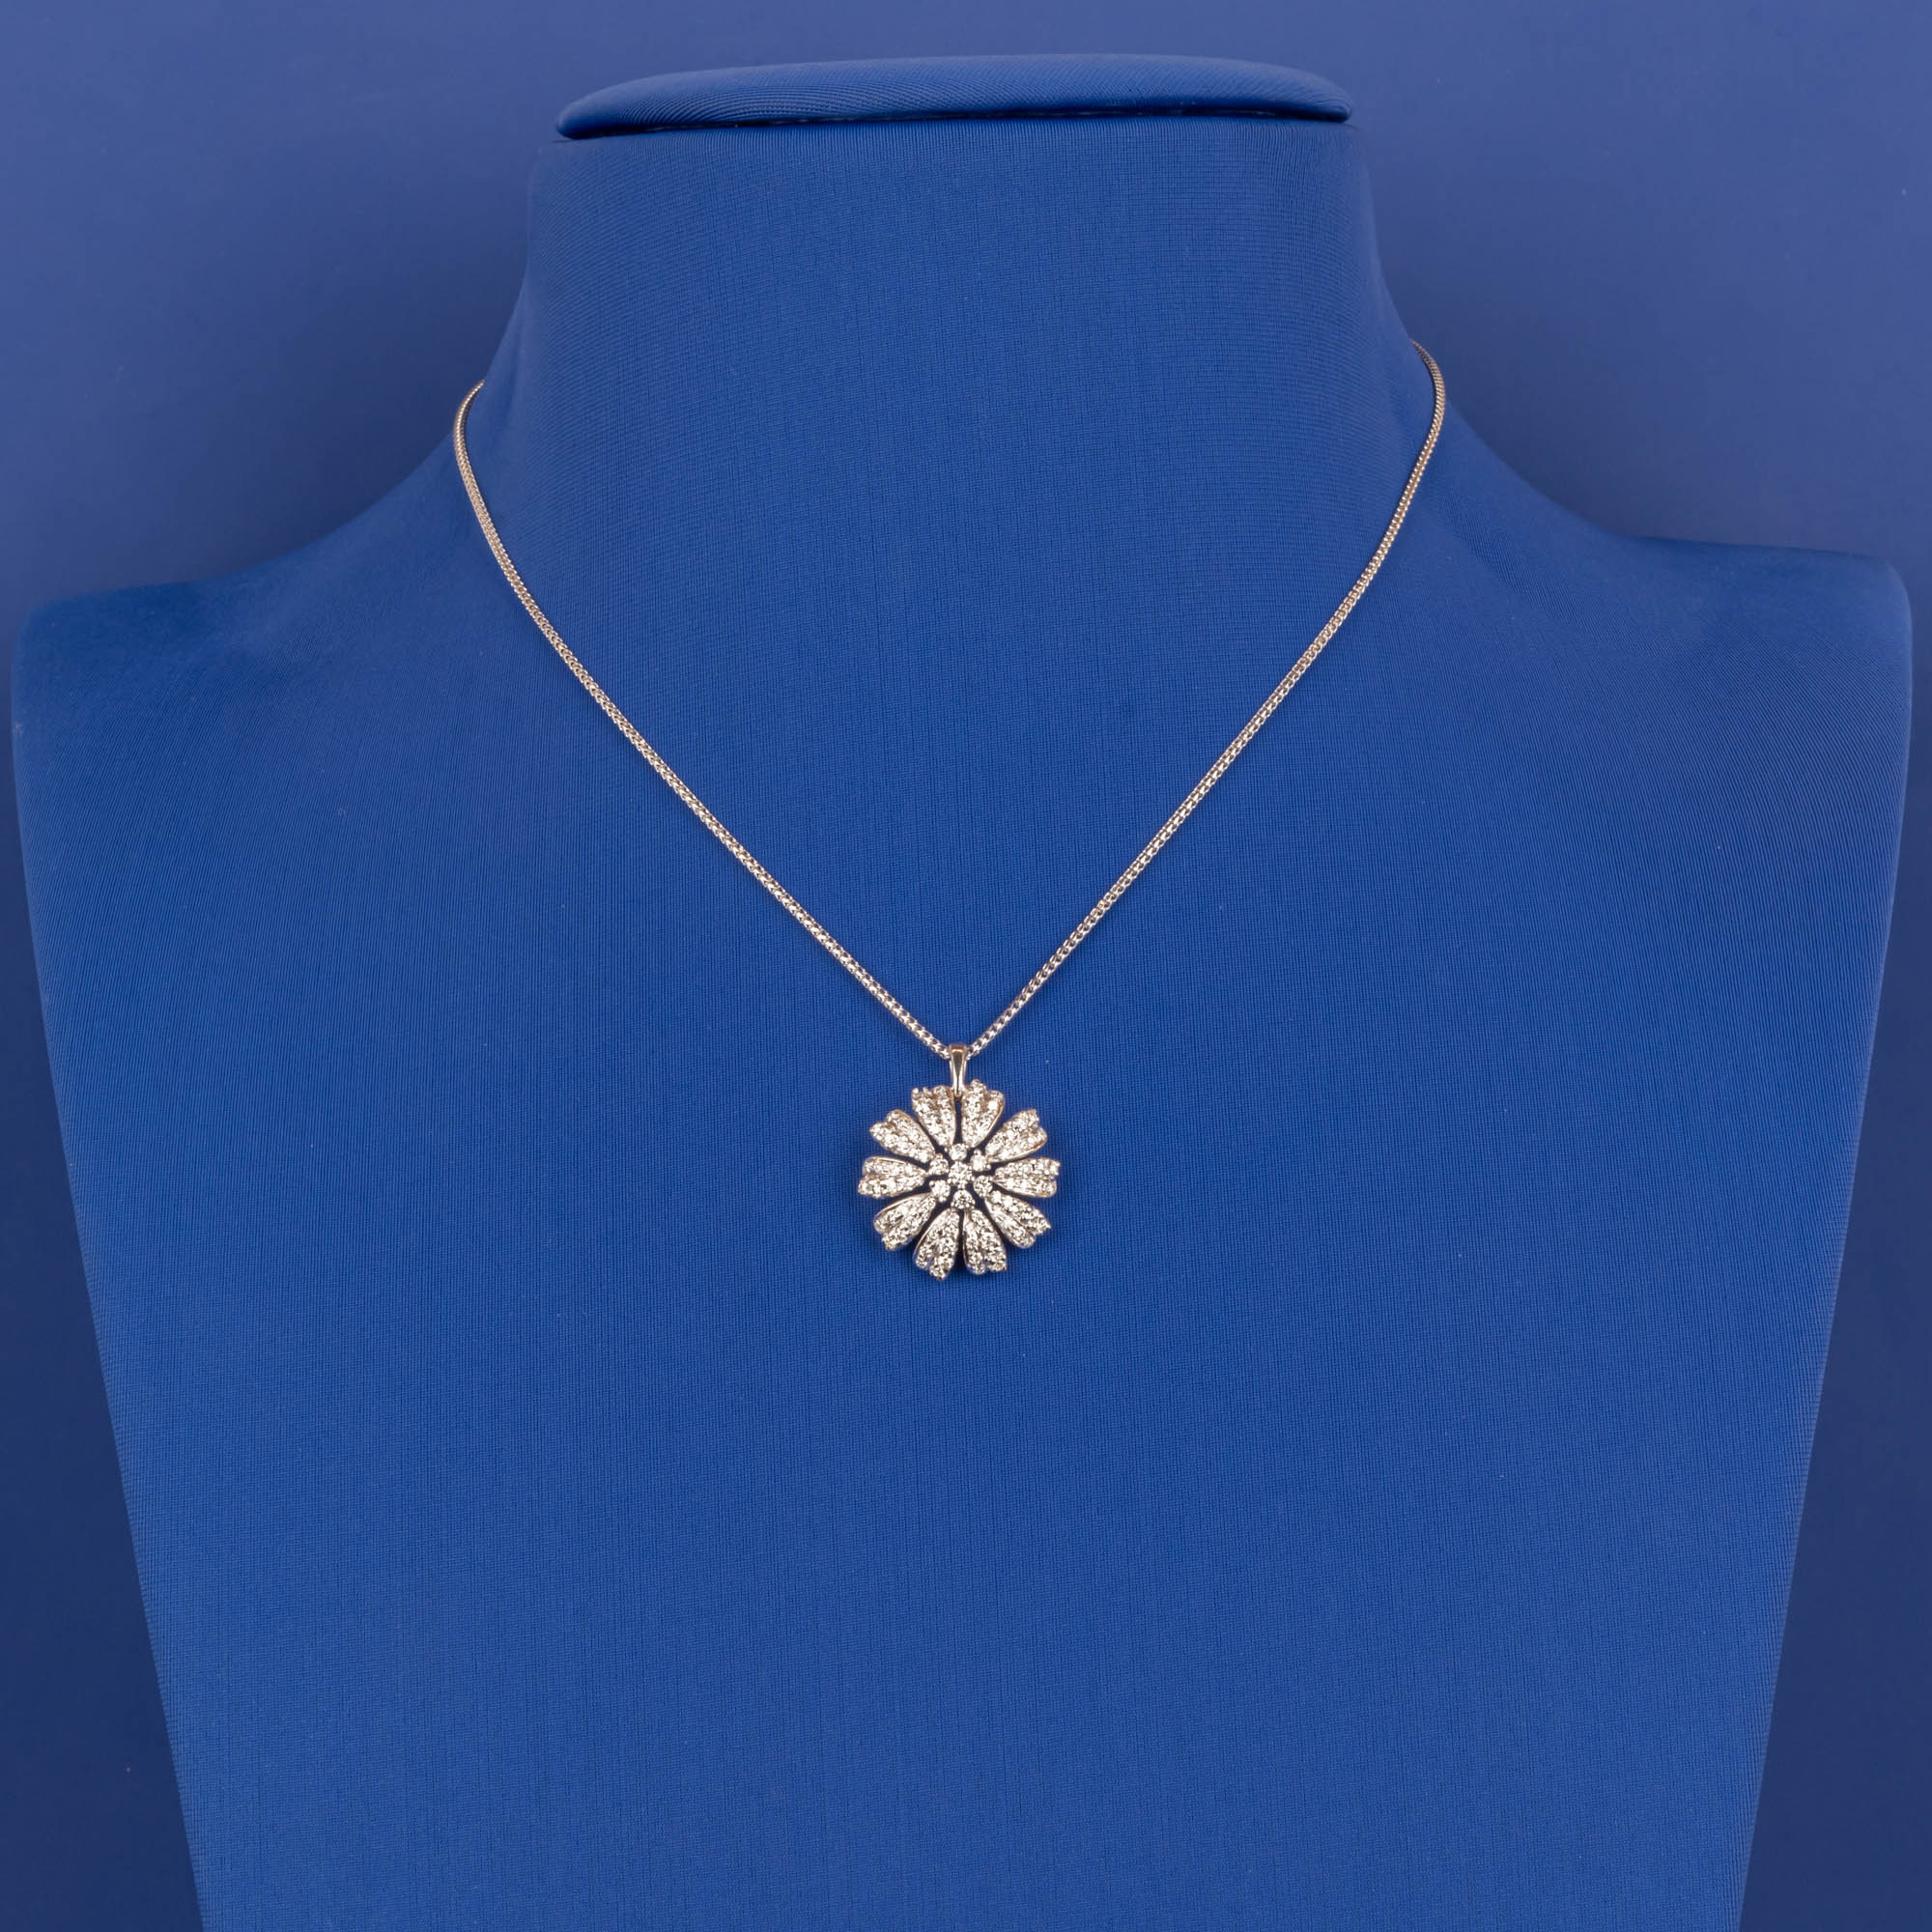 Moonlit Sparkle: Captivating 18K White Gold Diamond Pendant (chain not included)